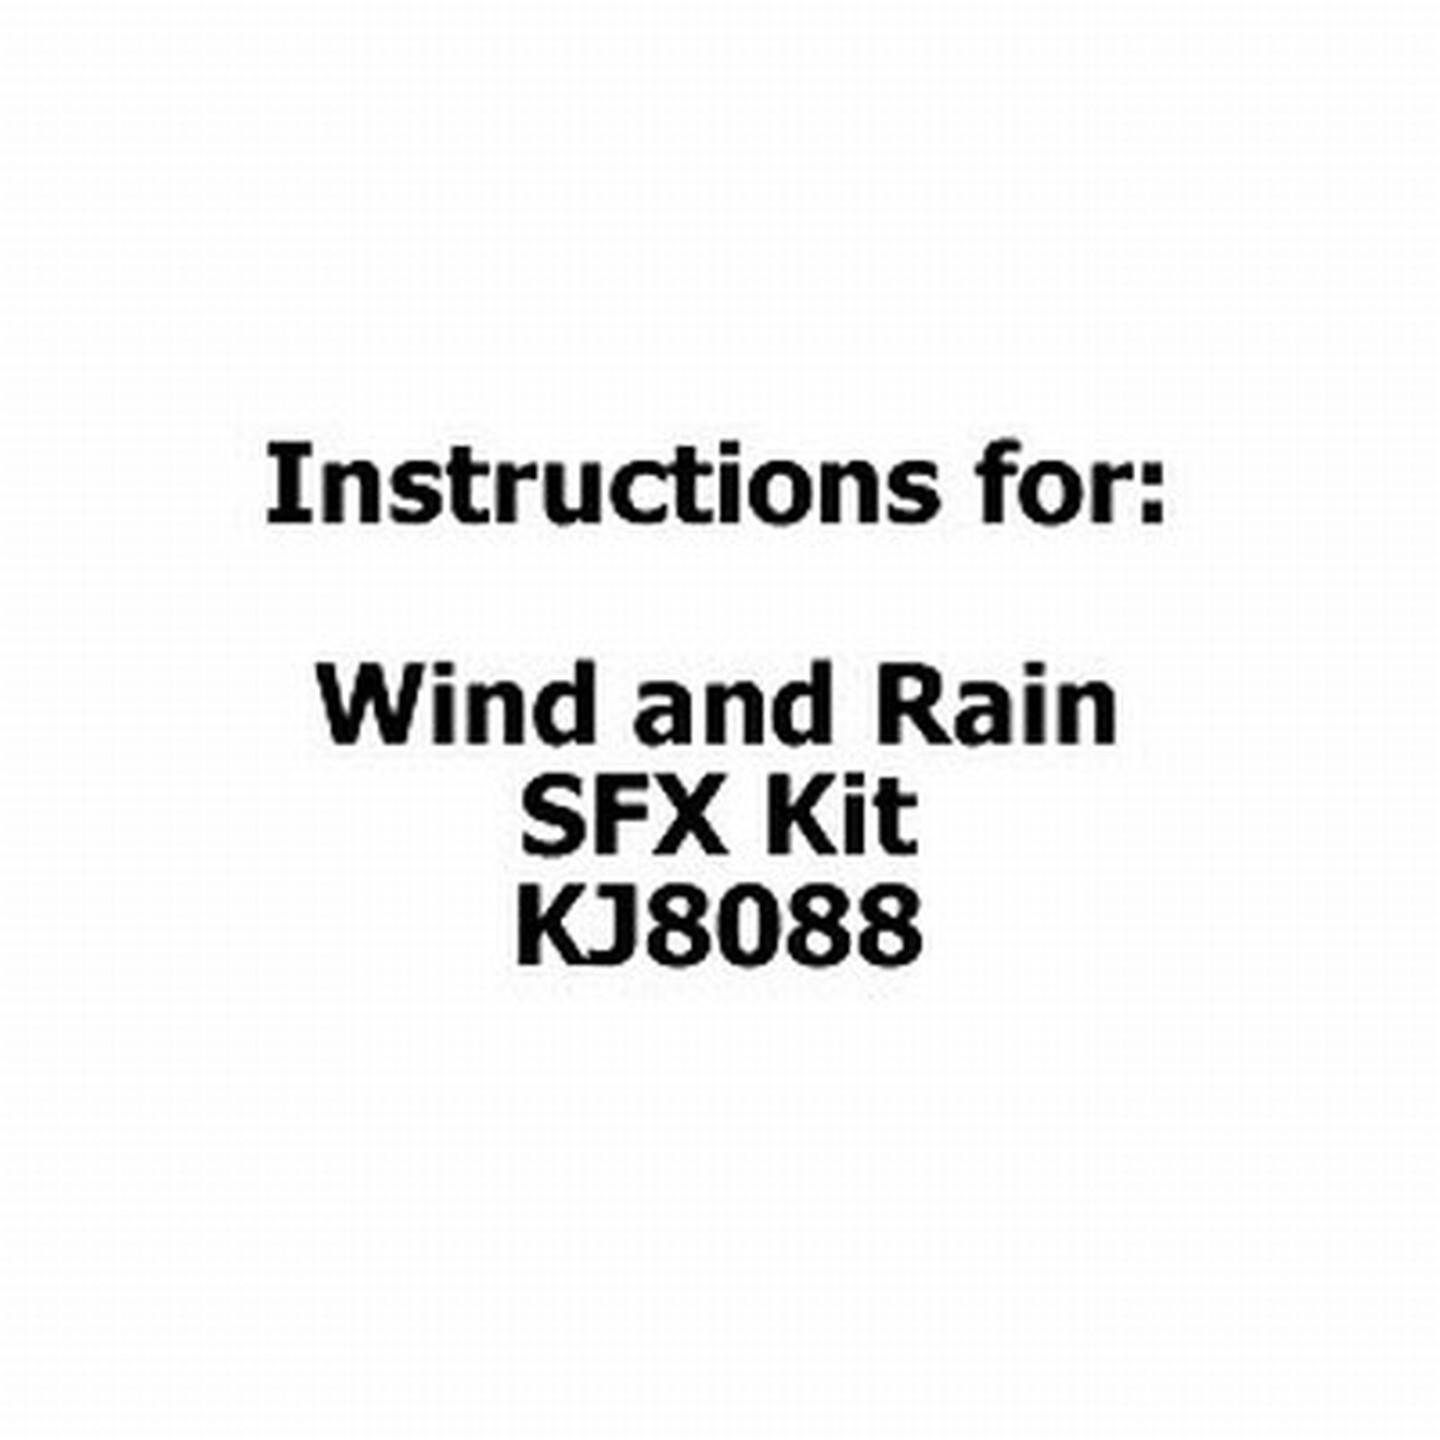 Instructions for Wind and Rain SFX Kit KJ8088